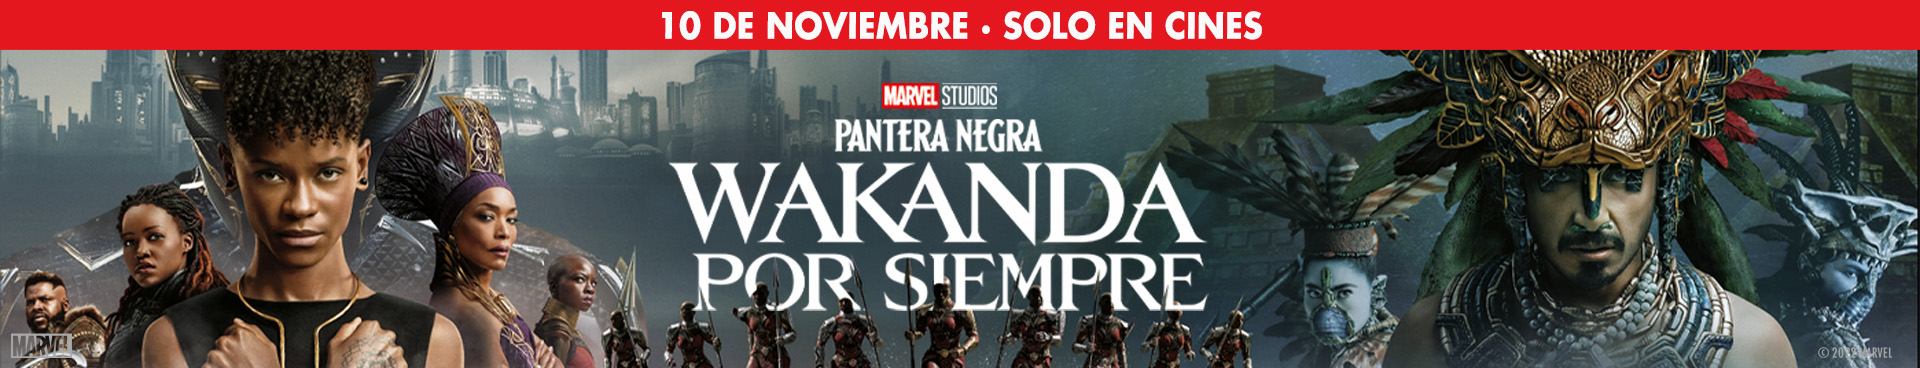 Pantera Negra Wakanda por siempre